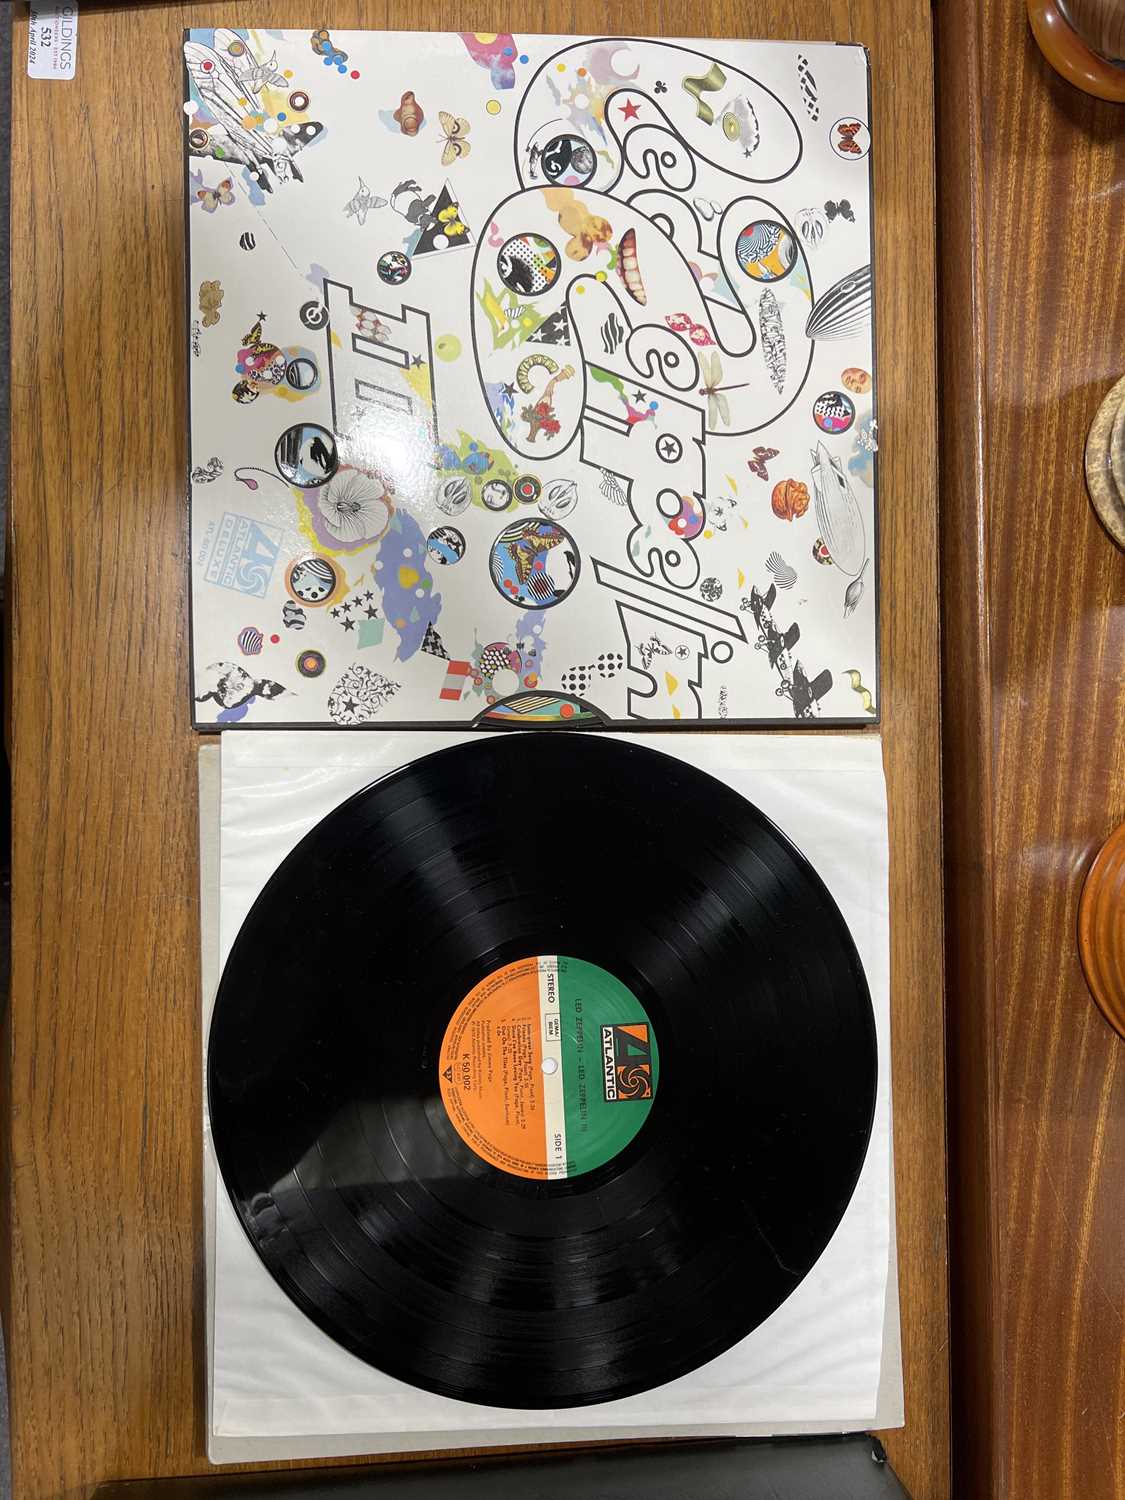 Eleven Led Zeppelin and Black Sabbath vinyl LP records - Image 4 of 6